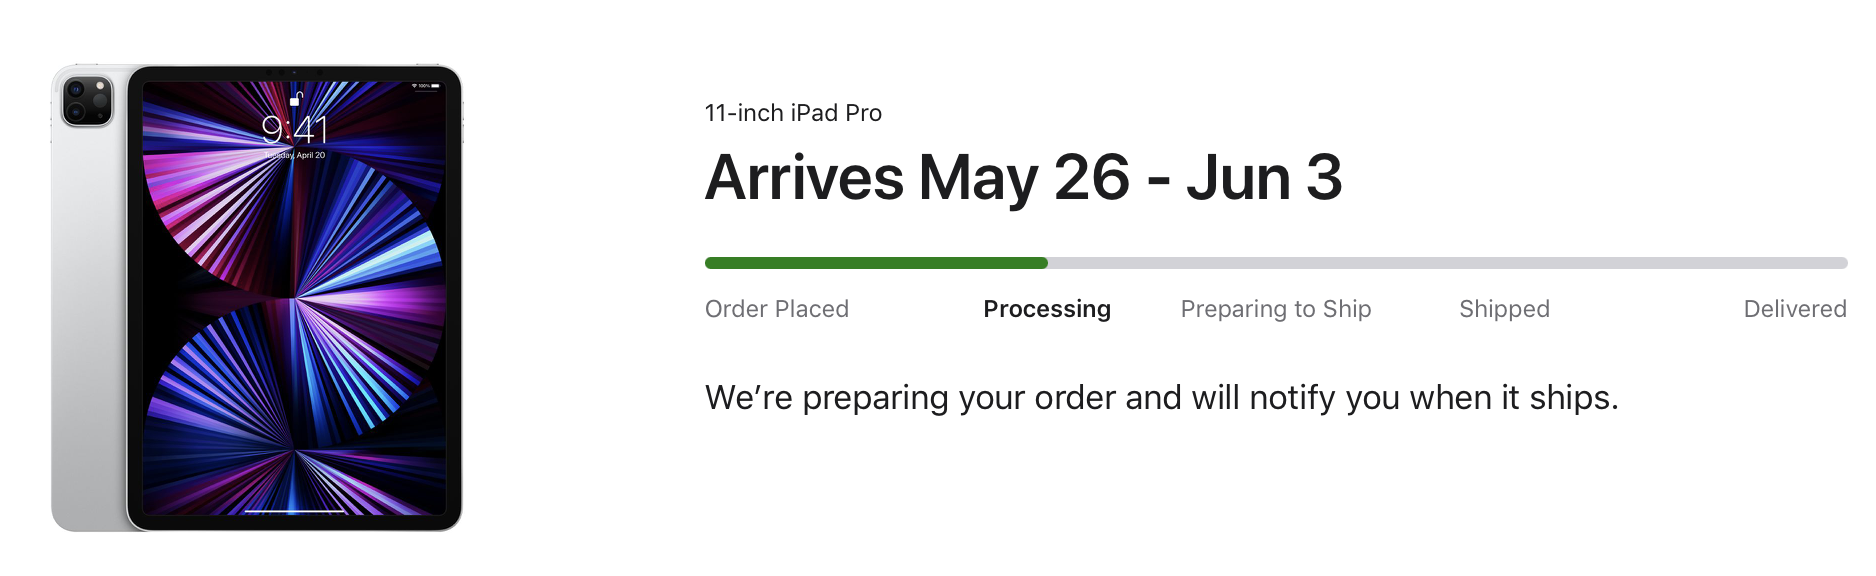 My ipad pro order status: processing